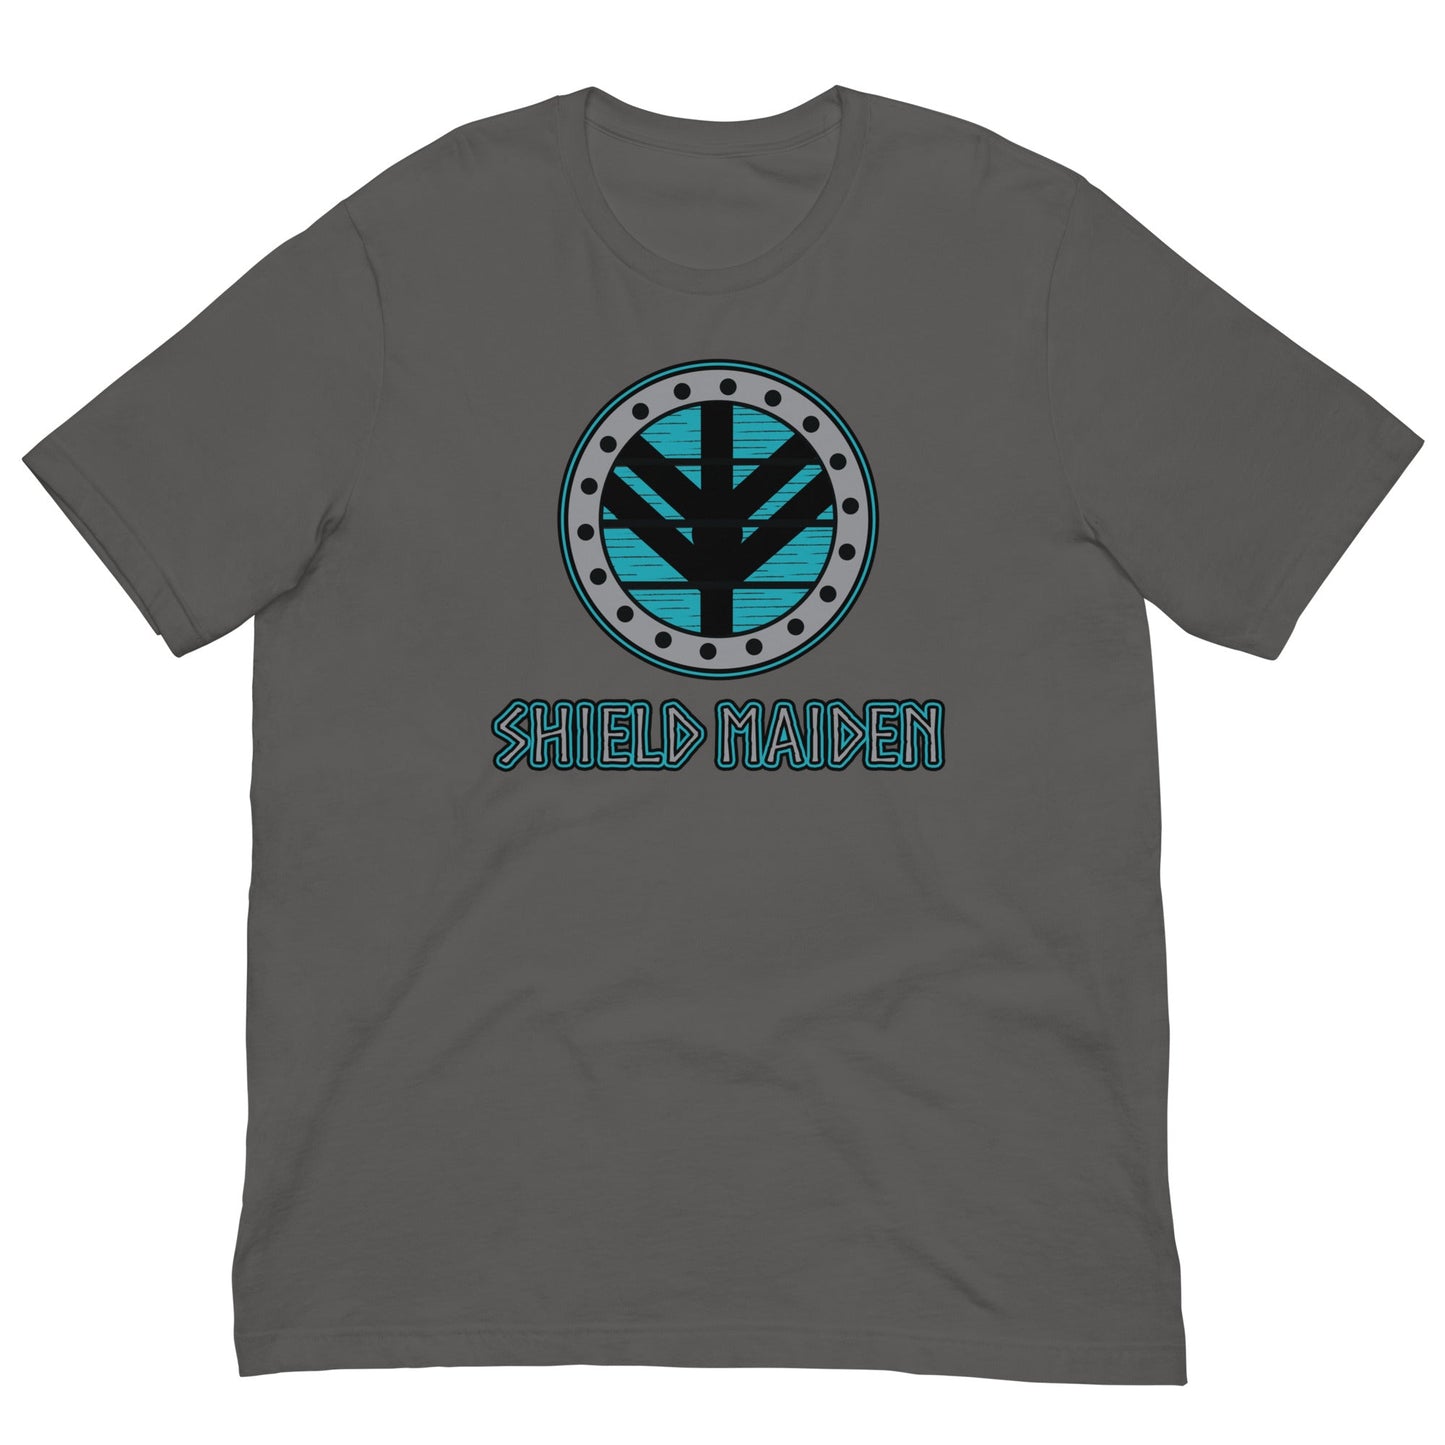 Shield maiden T-shirt Asphalt / S